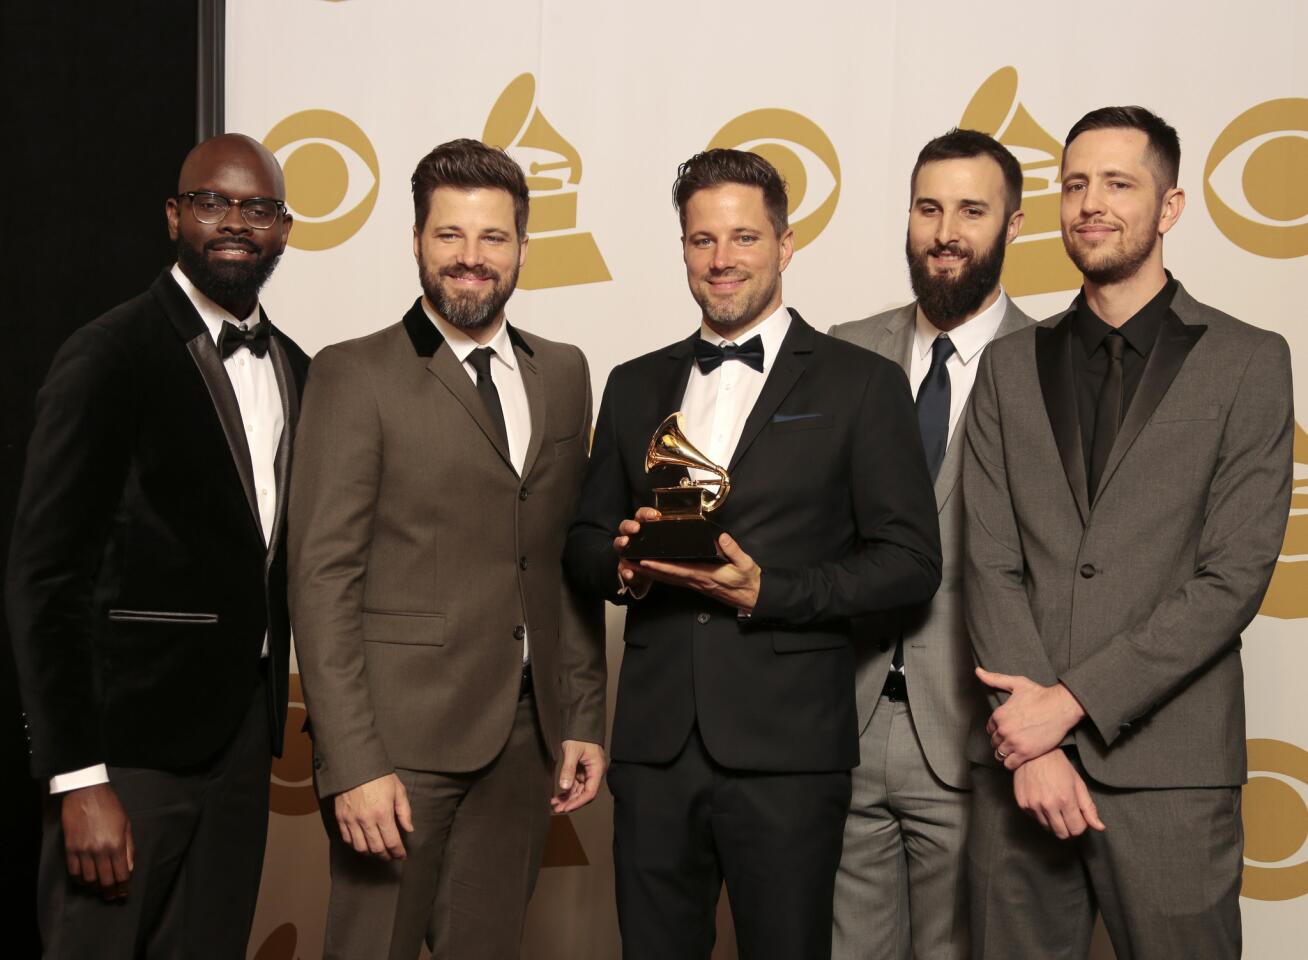 Grammys 2015: Backstage photos